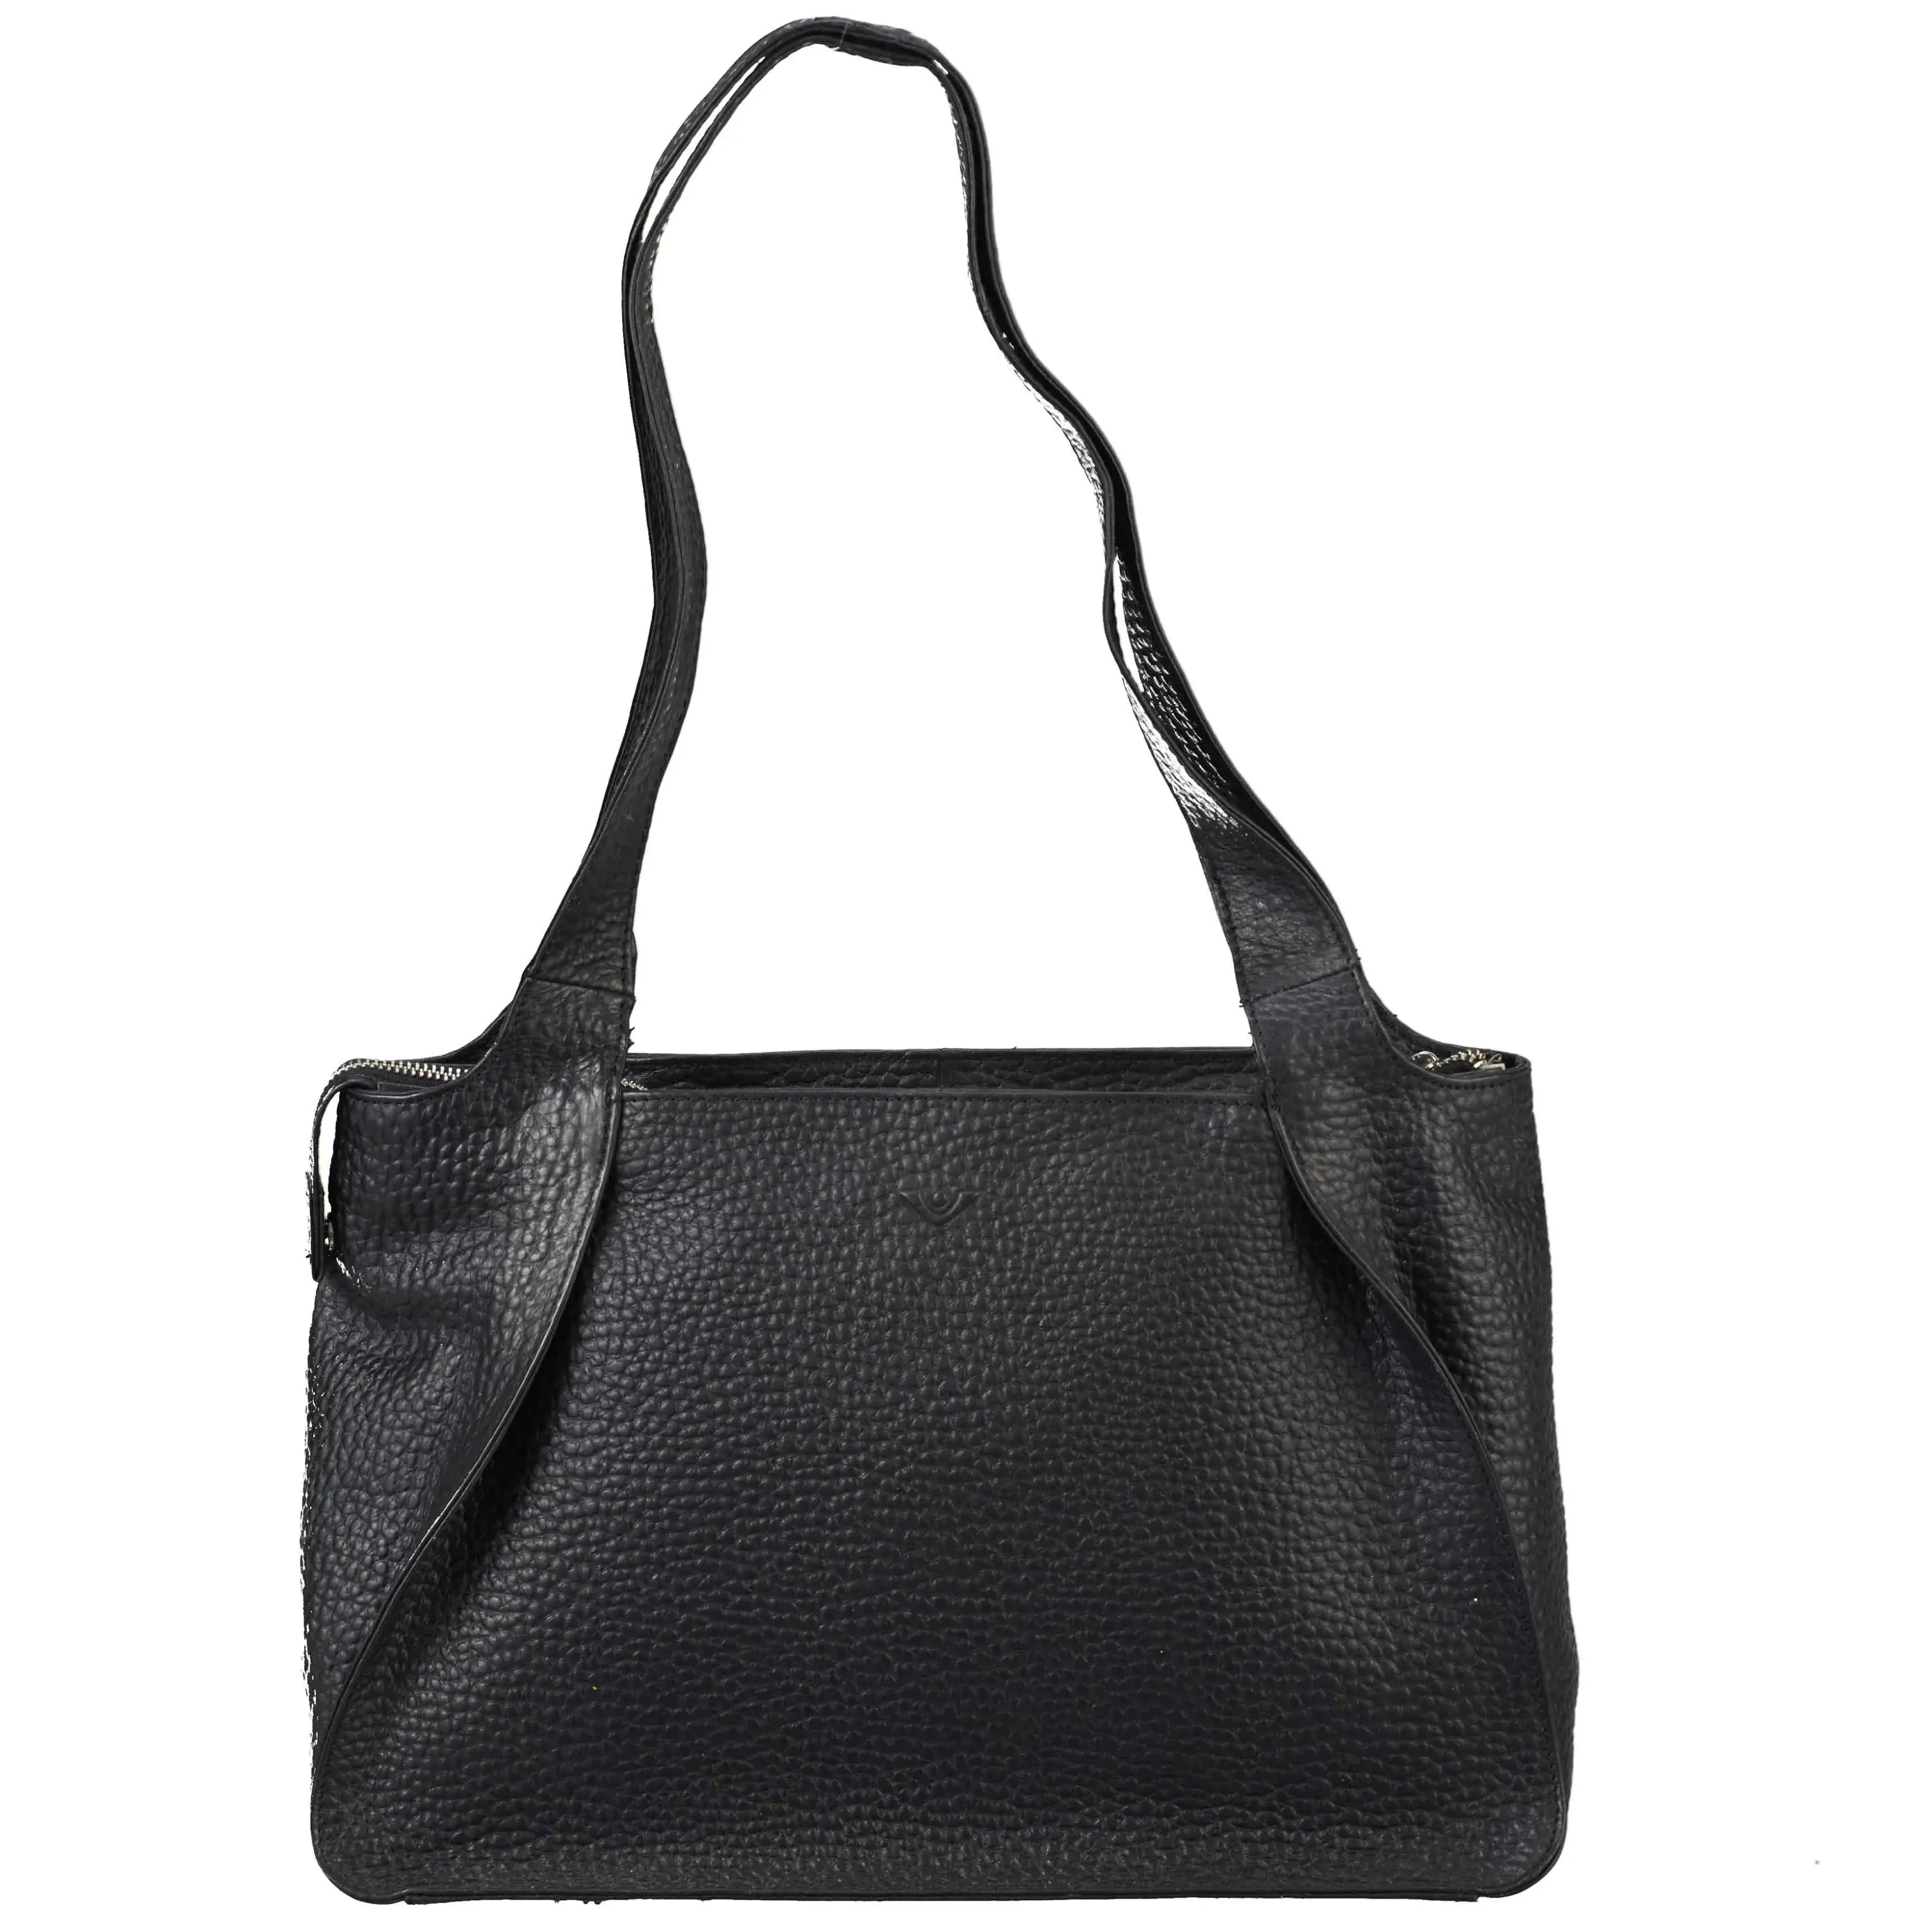 VOi-Design Hirsch Aime shoulder bag 39 cm - Black